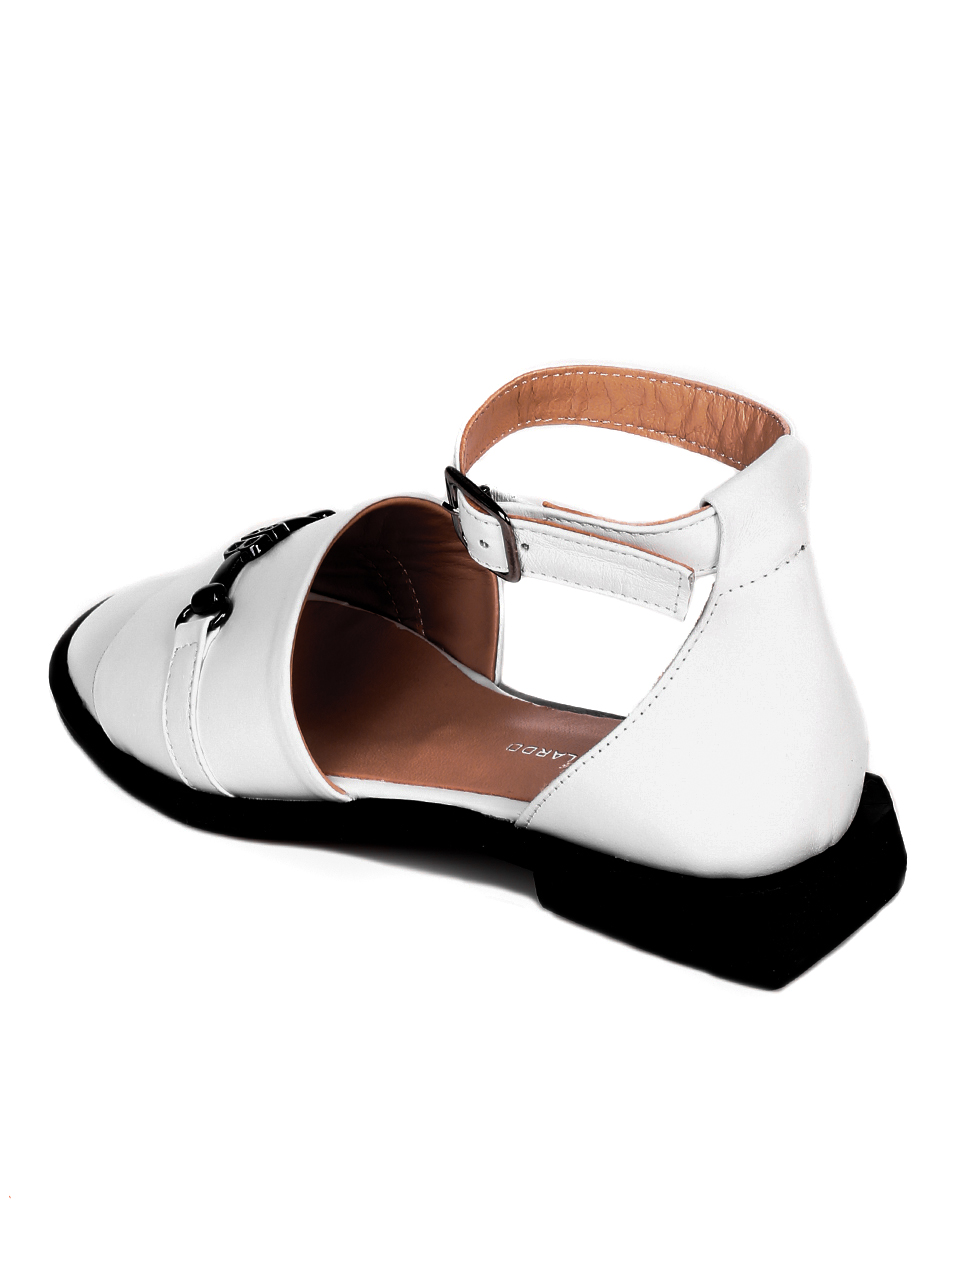 Ежедневни дамски равни сандали от естествена кожа 4AT-21326 white